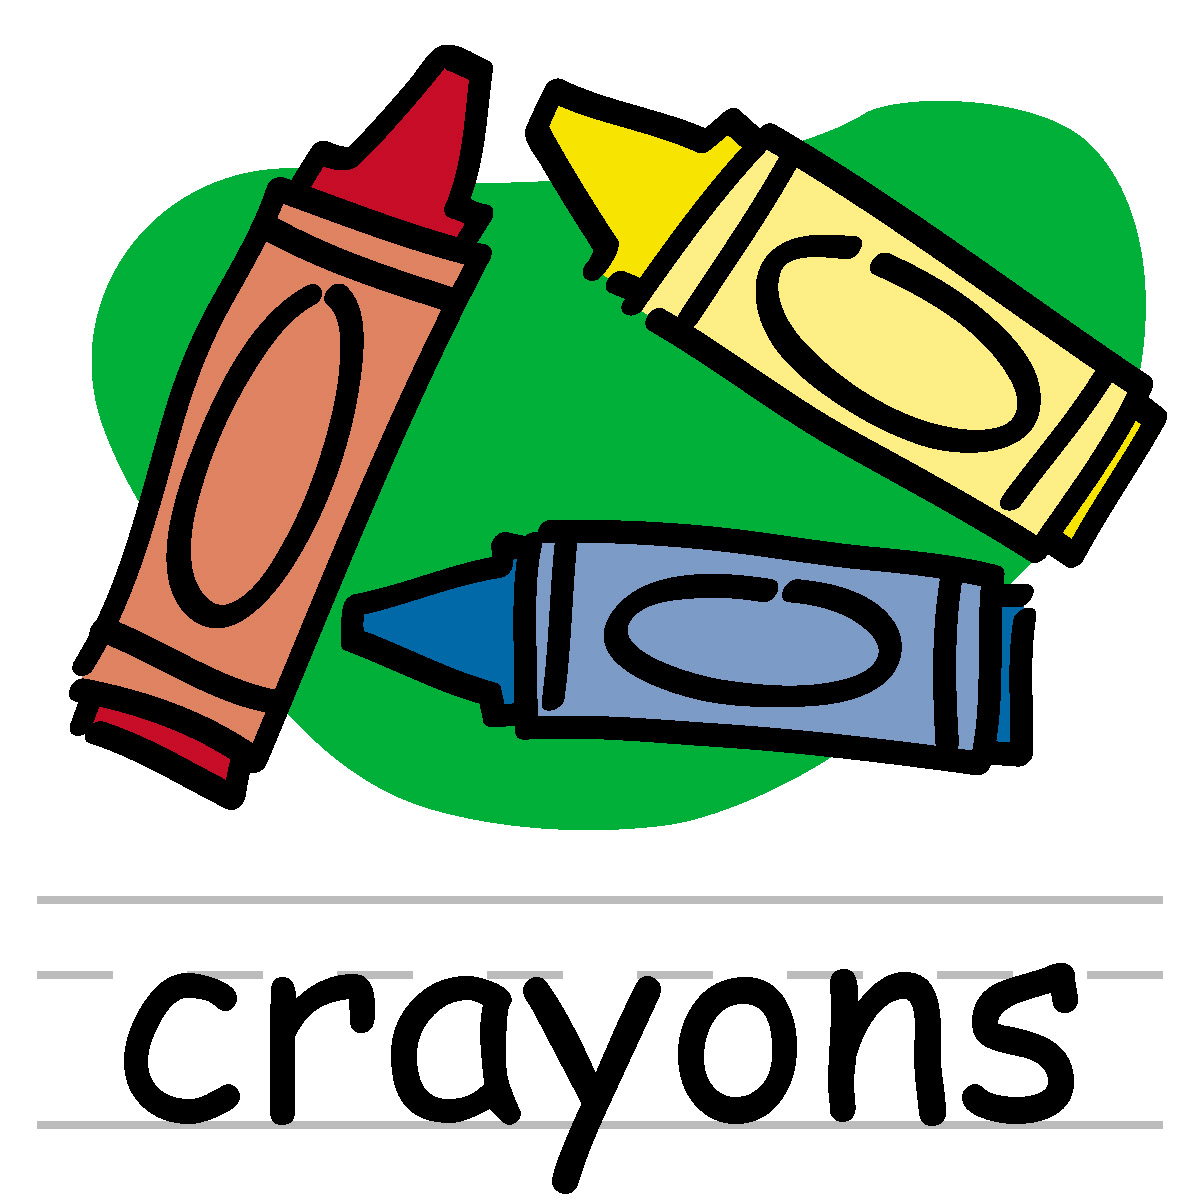 crayon clip art | Clipart Panda - Free Clipart Images